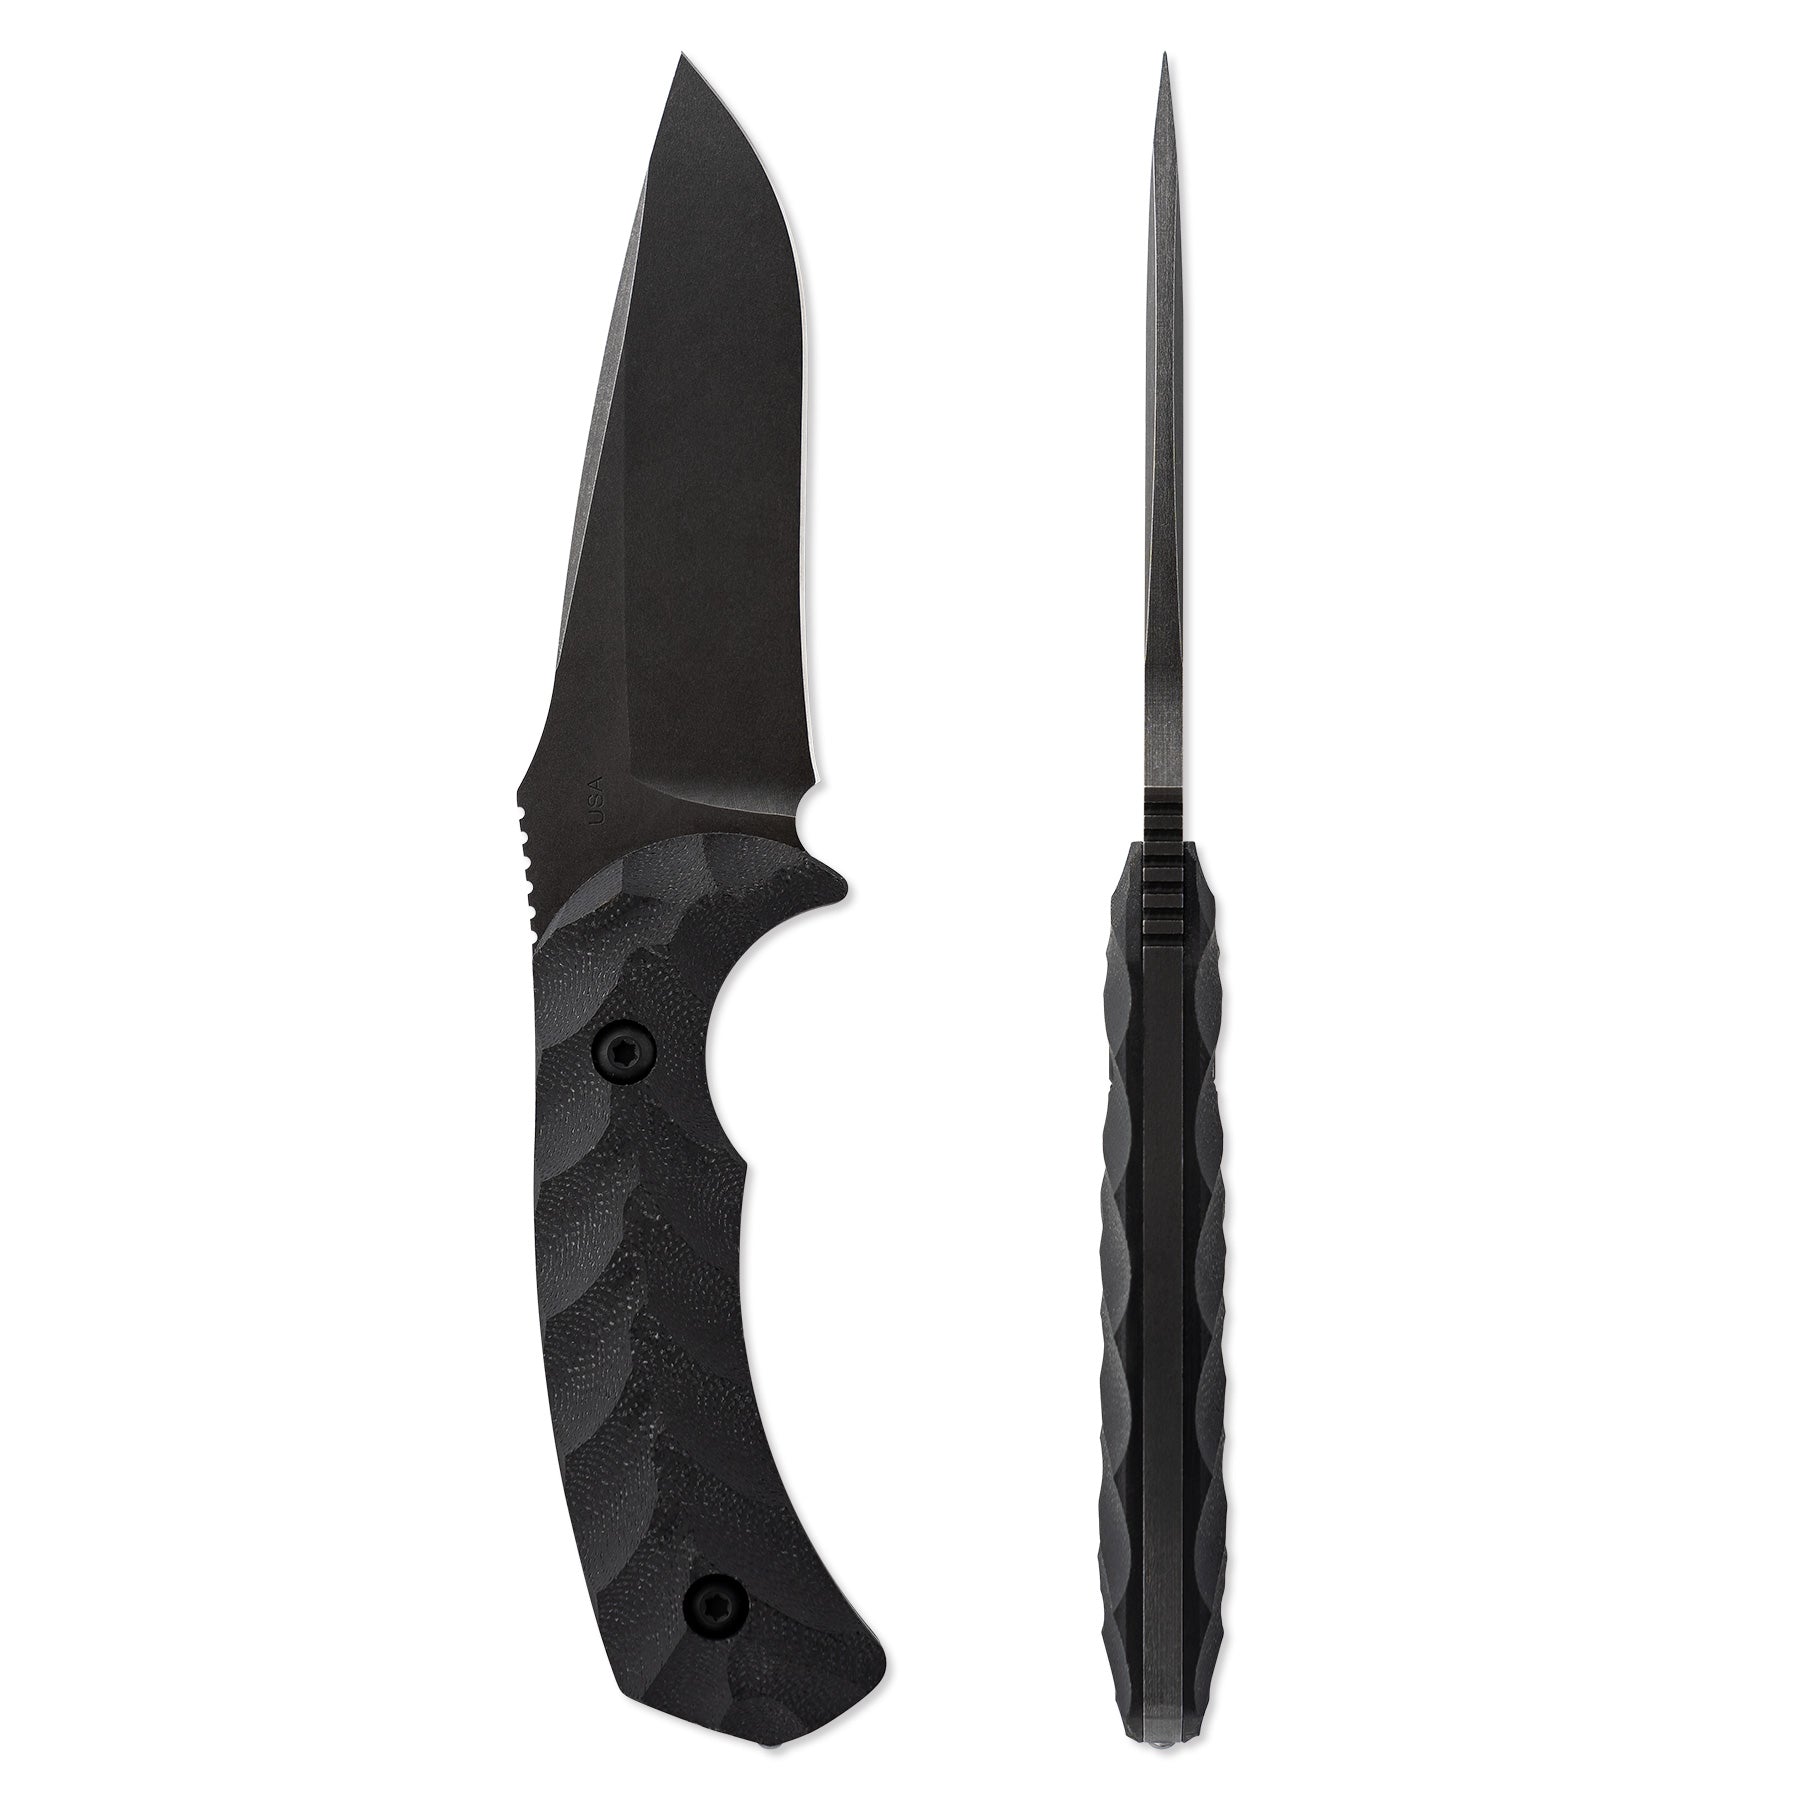 Toor Knives Mullet Carbon 1